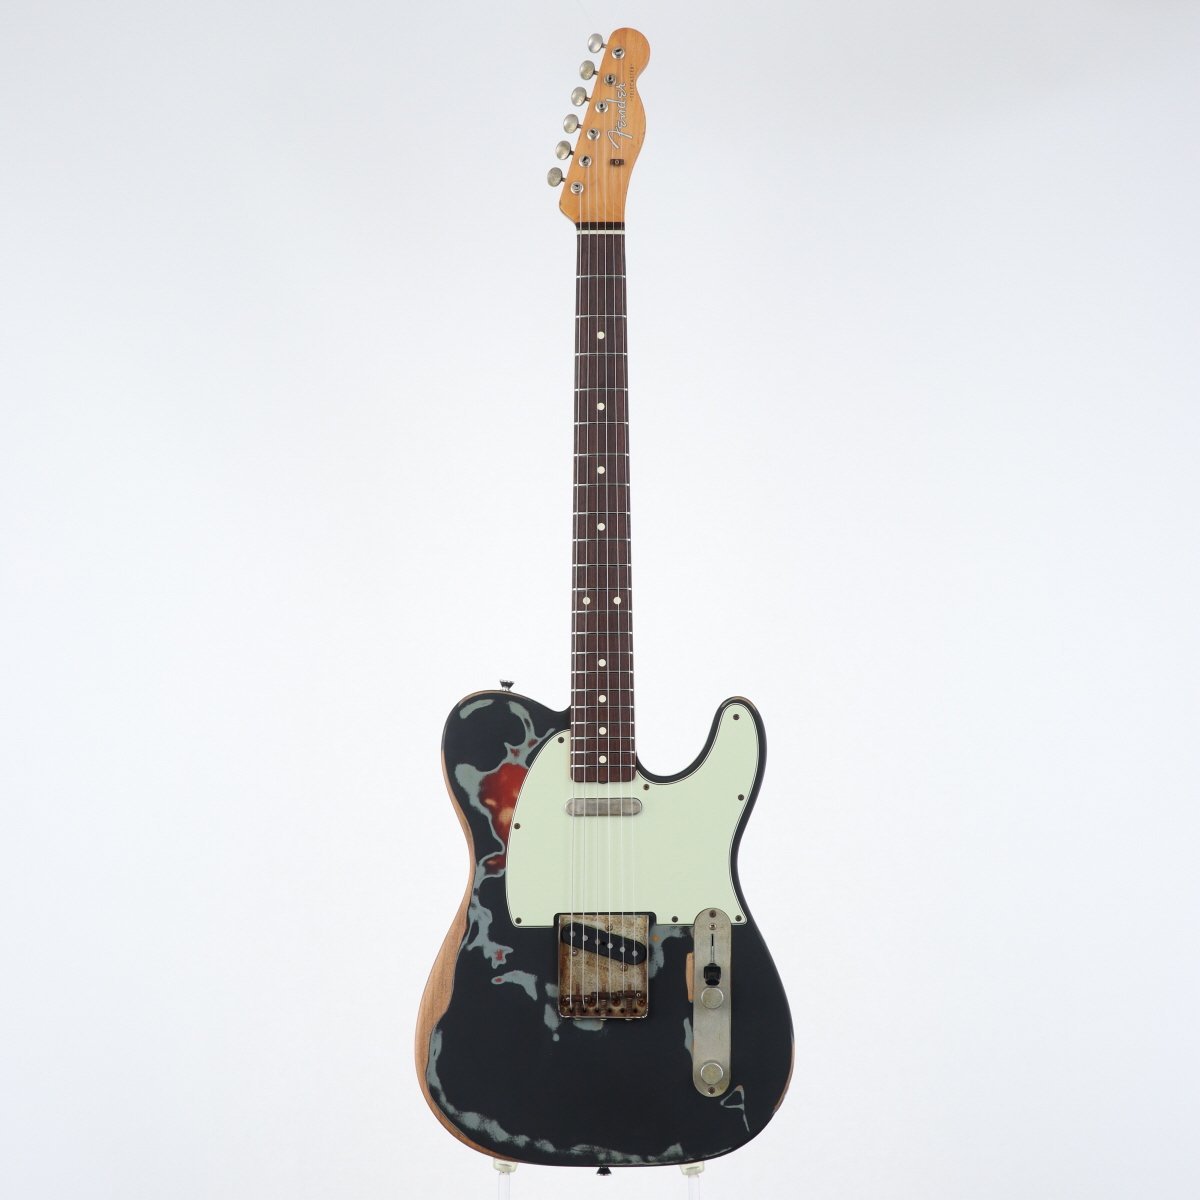 Fender mexico JOE STRUMMER TELECASTER ジョーストラマー 限定モデル 